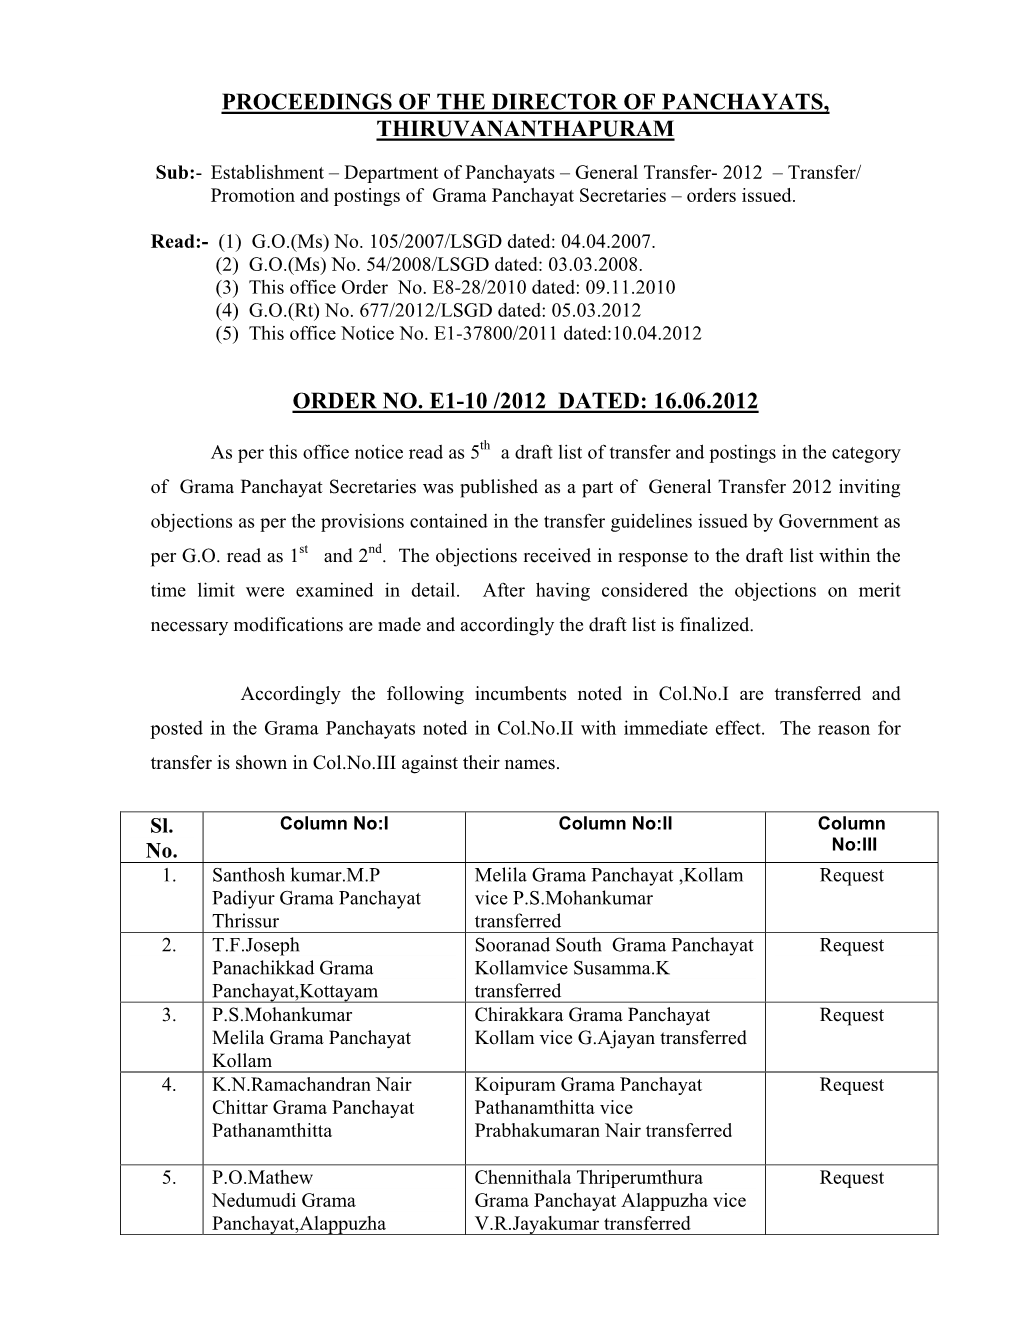 Department of Panchayats – General Transfer- 2012 – Transfer/ Promotion and Postings of Grama Panchayat Secretaries – Orders Issued